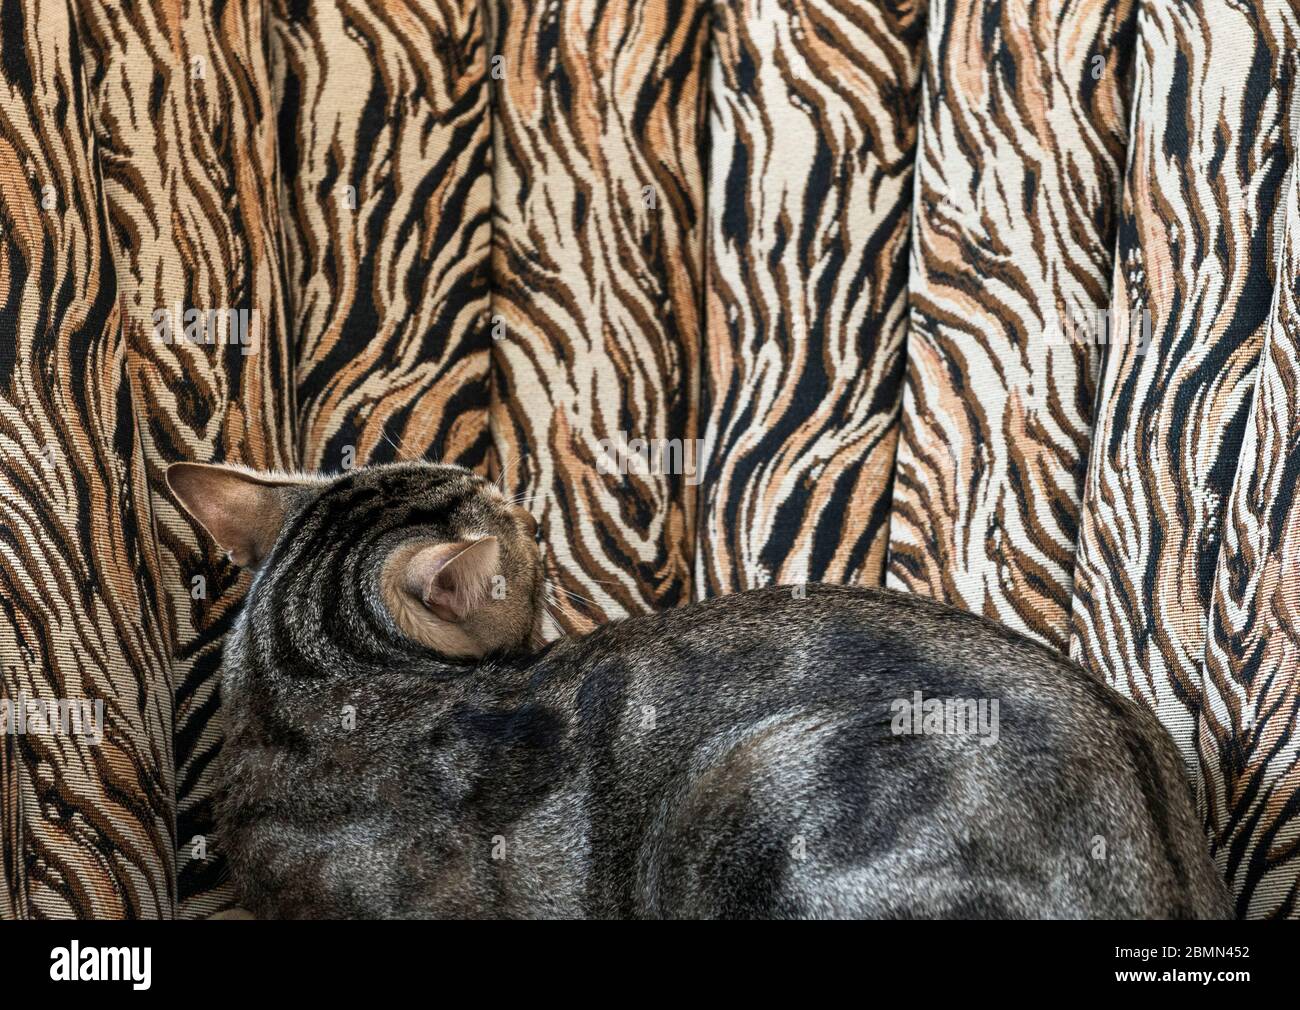 Seltene afrikanische Sokoke Katze auf einem Sessel mit Zebramuster  Stockfotografie - Alamy